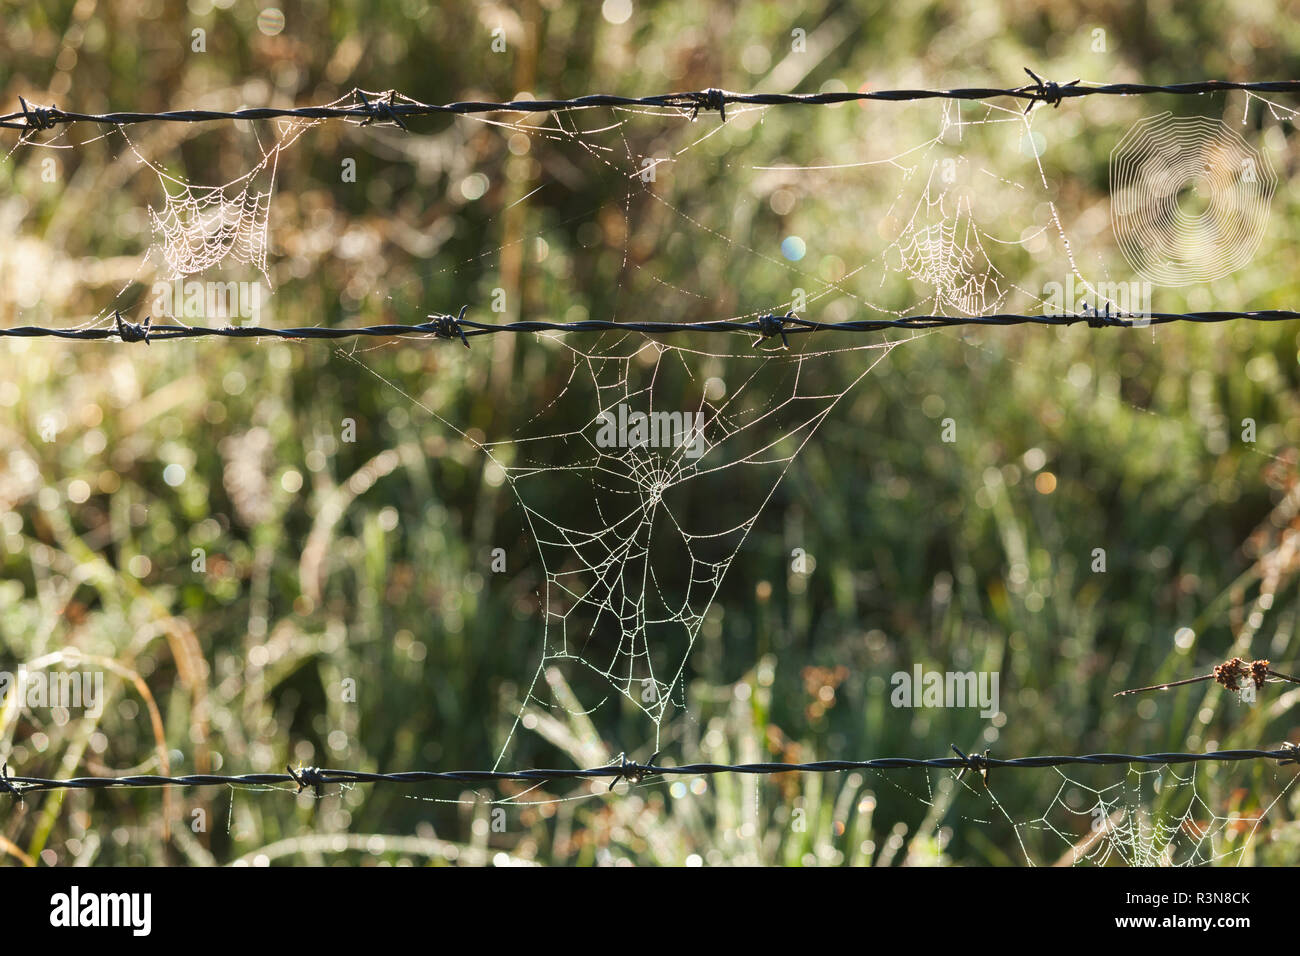 New Zealand, South Island, West Coast, Fox Glacier Village, Lake Matheson, barbed wire and cobweb, dawn Stock Photo